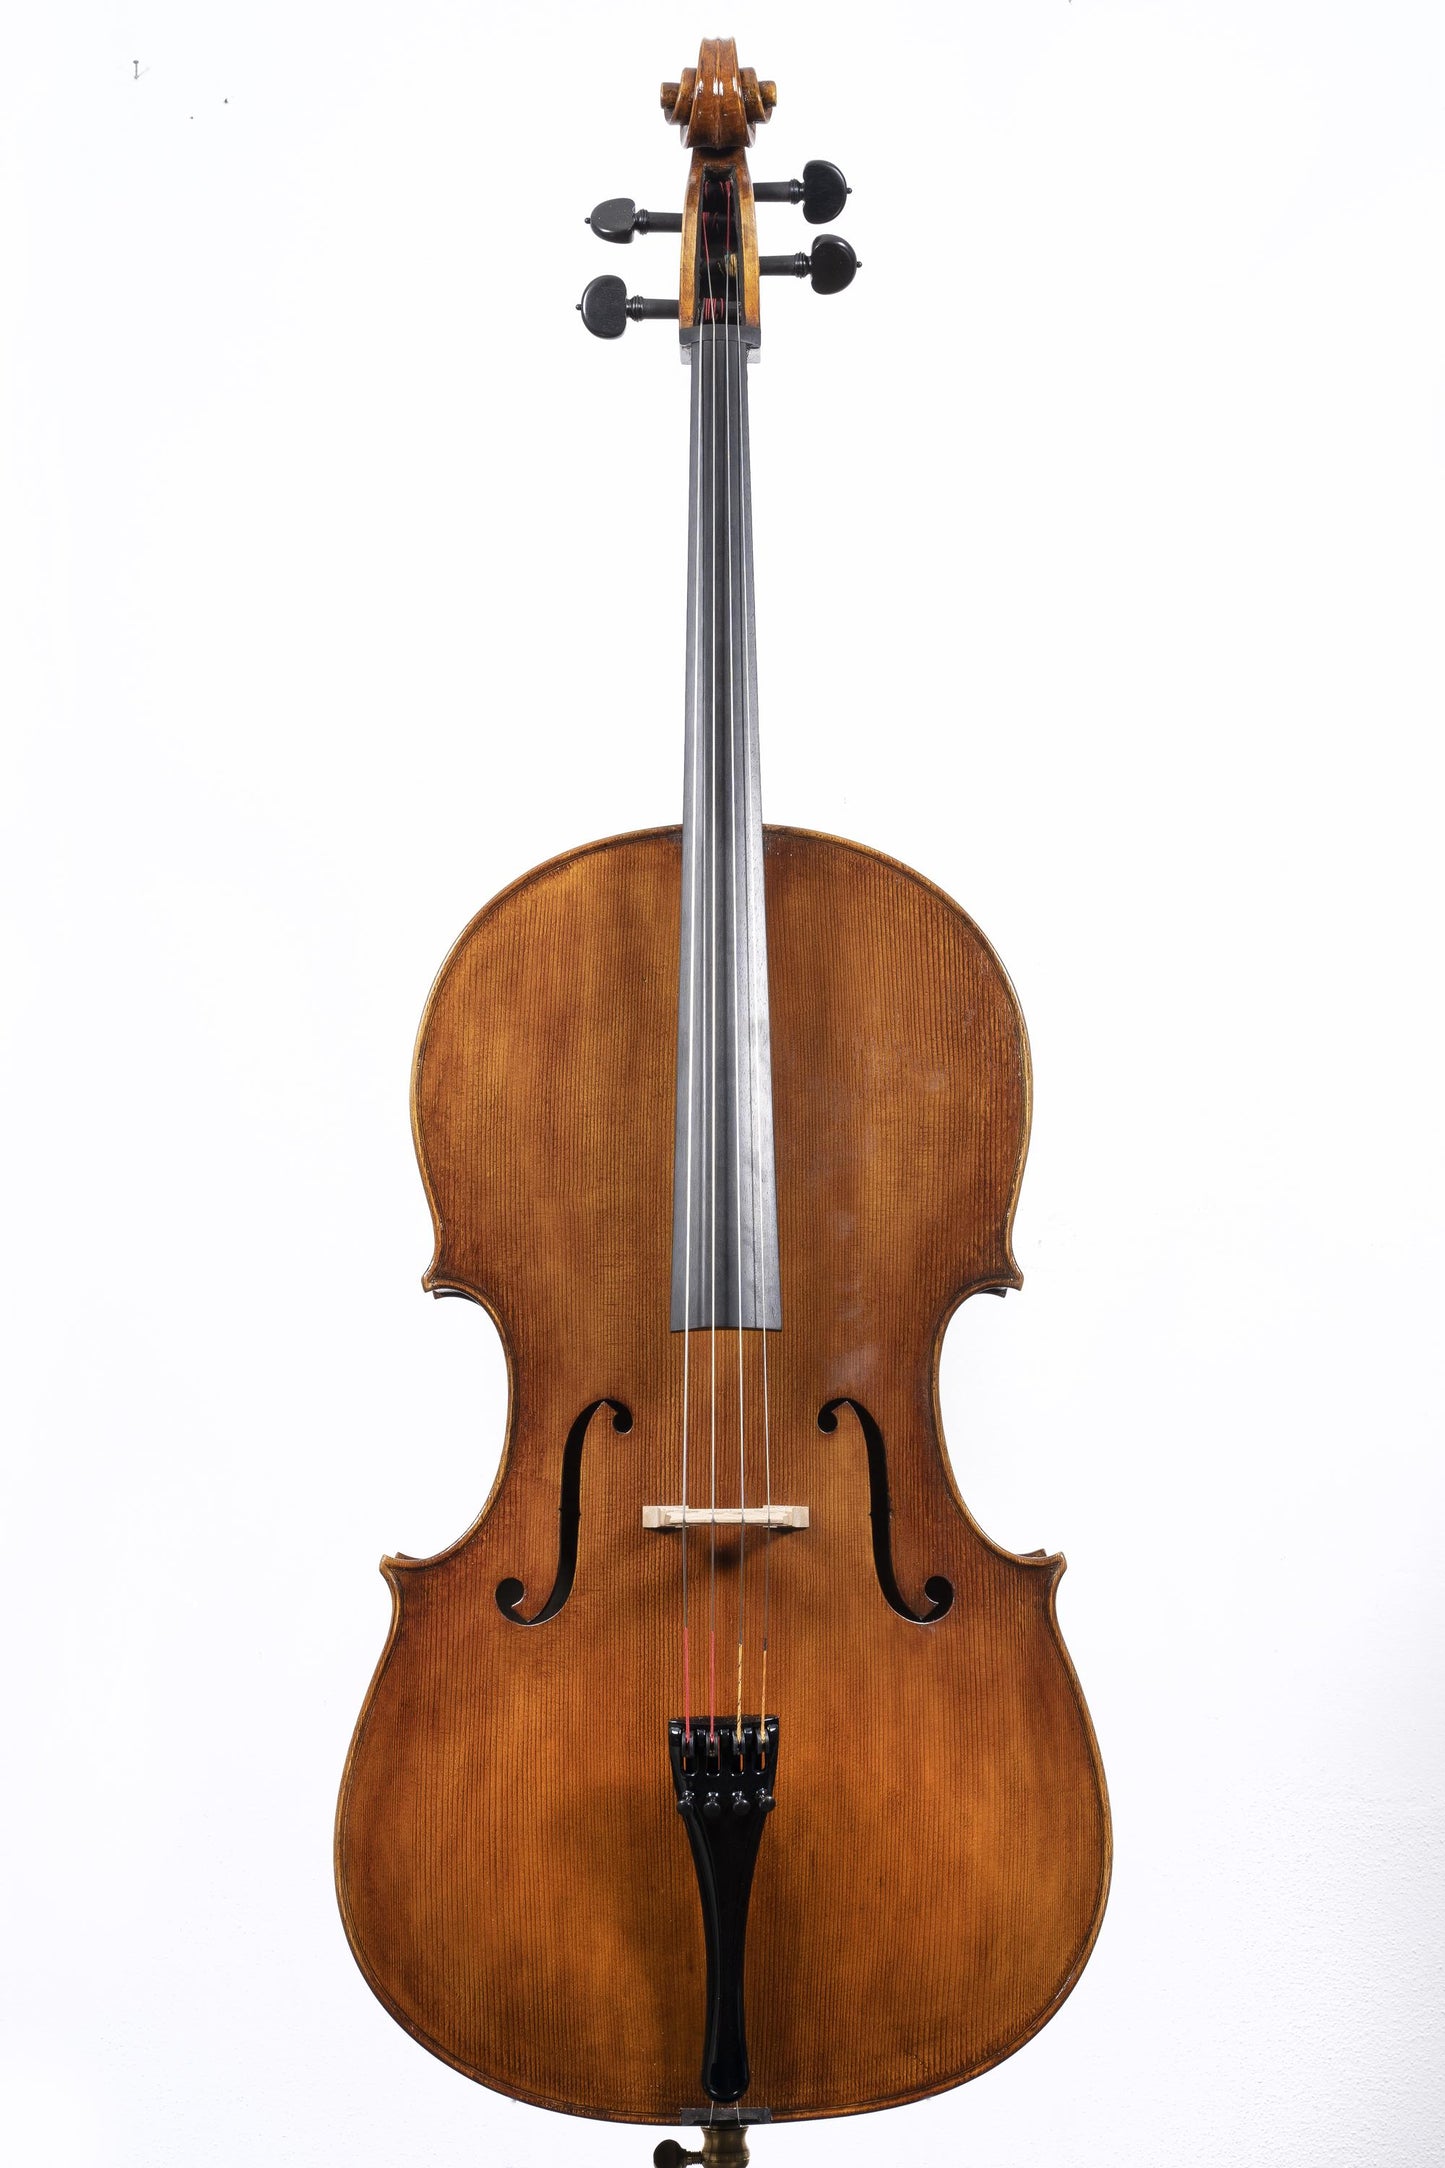 Vettori Paolo Cello Mod. Montagnana Sleeping Beauty "Botticelli" 2019